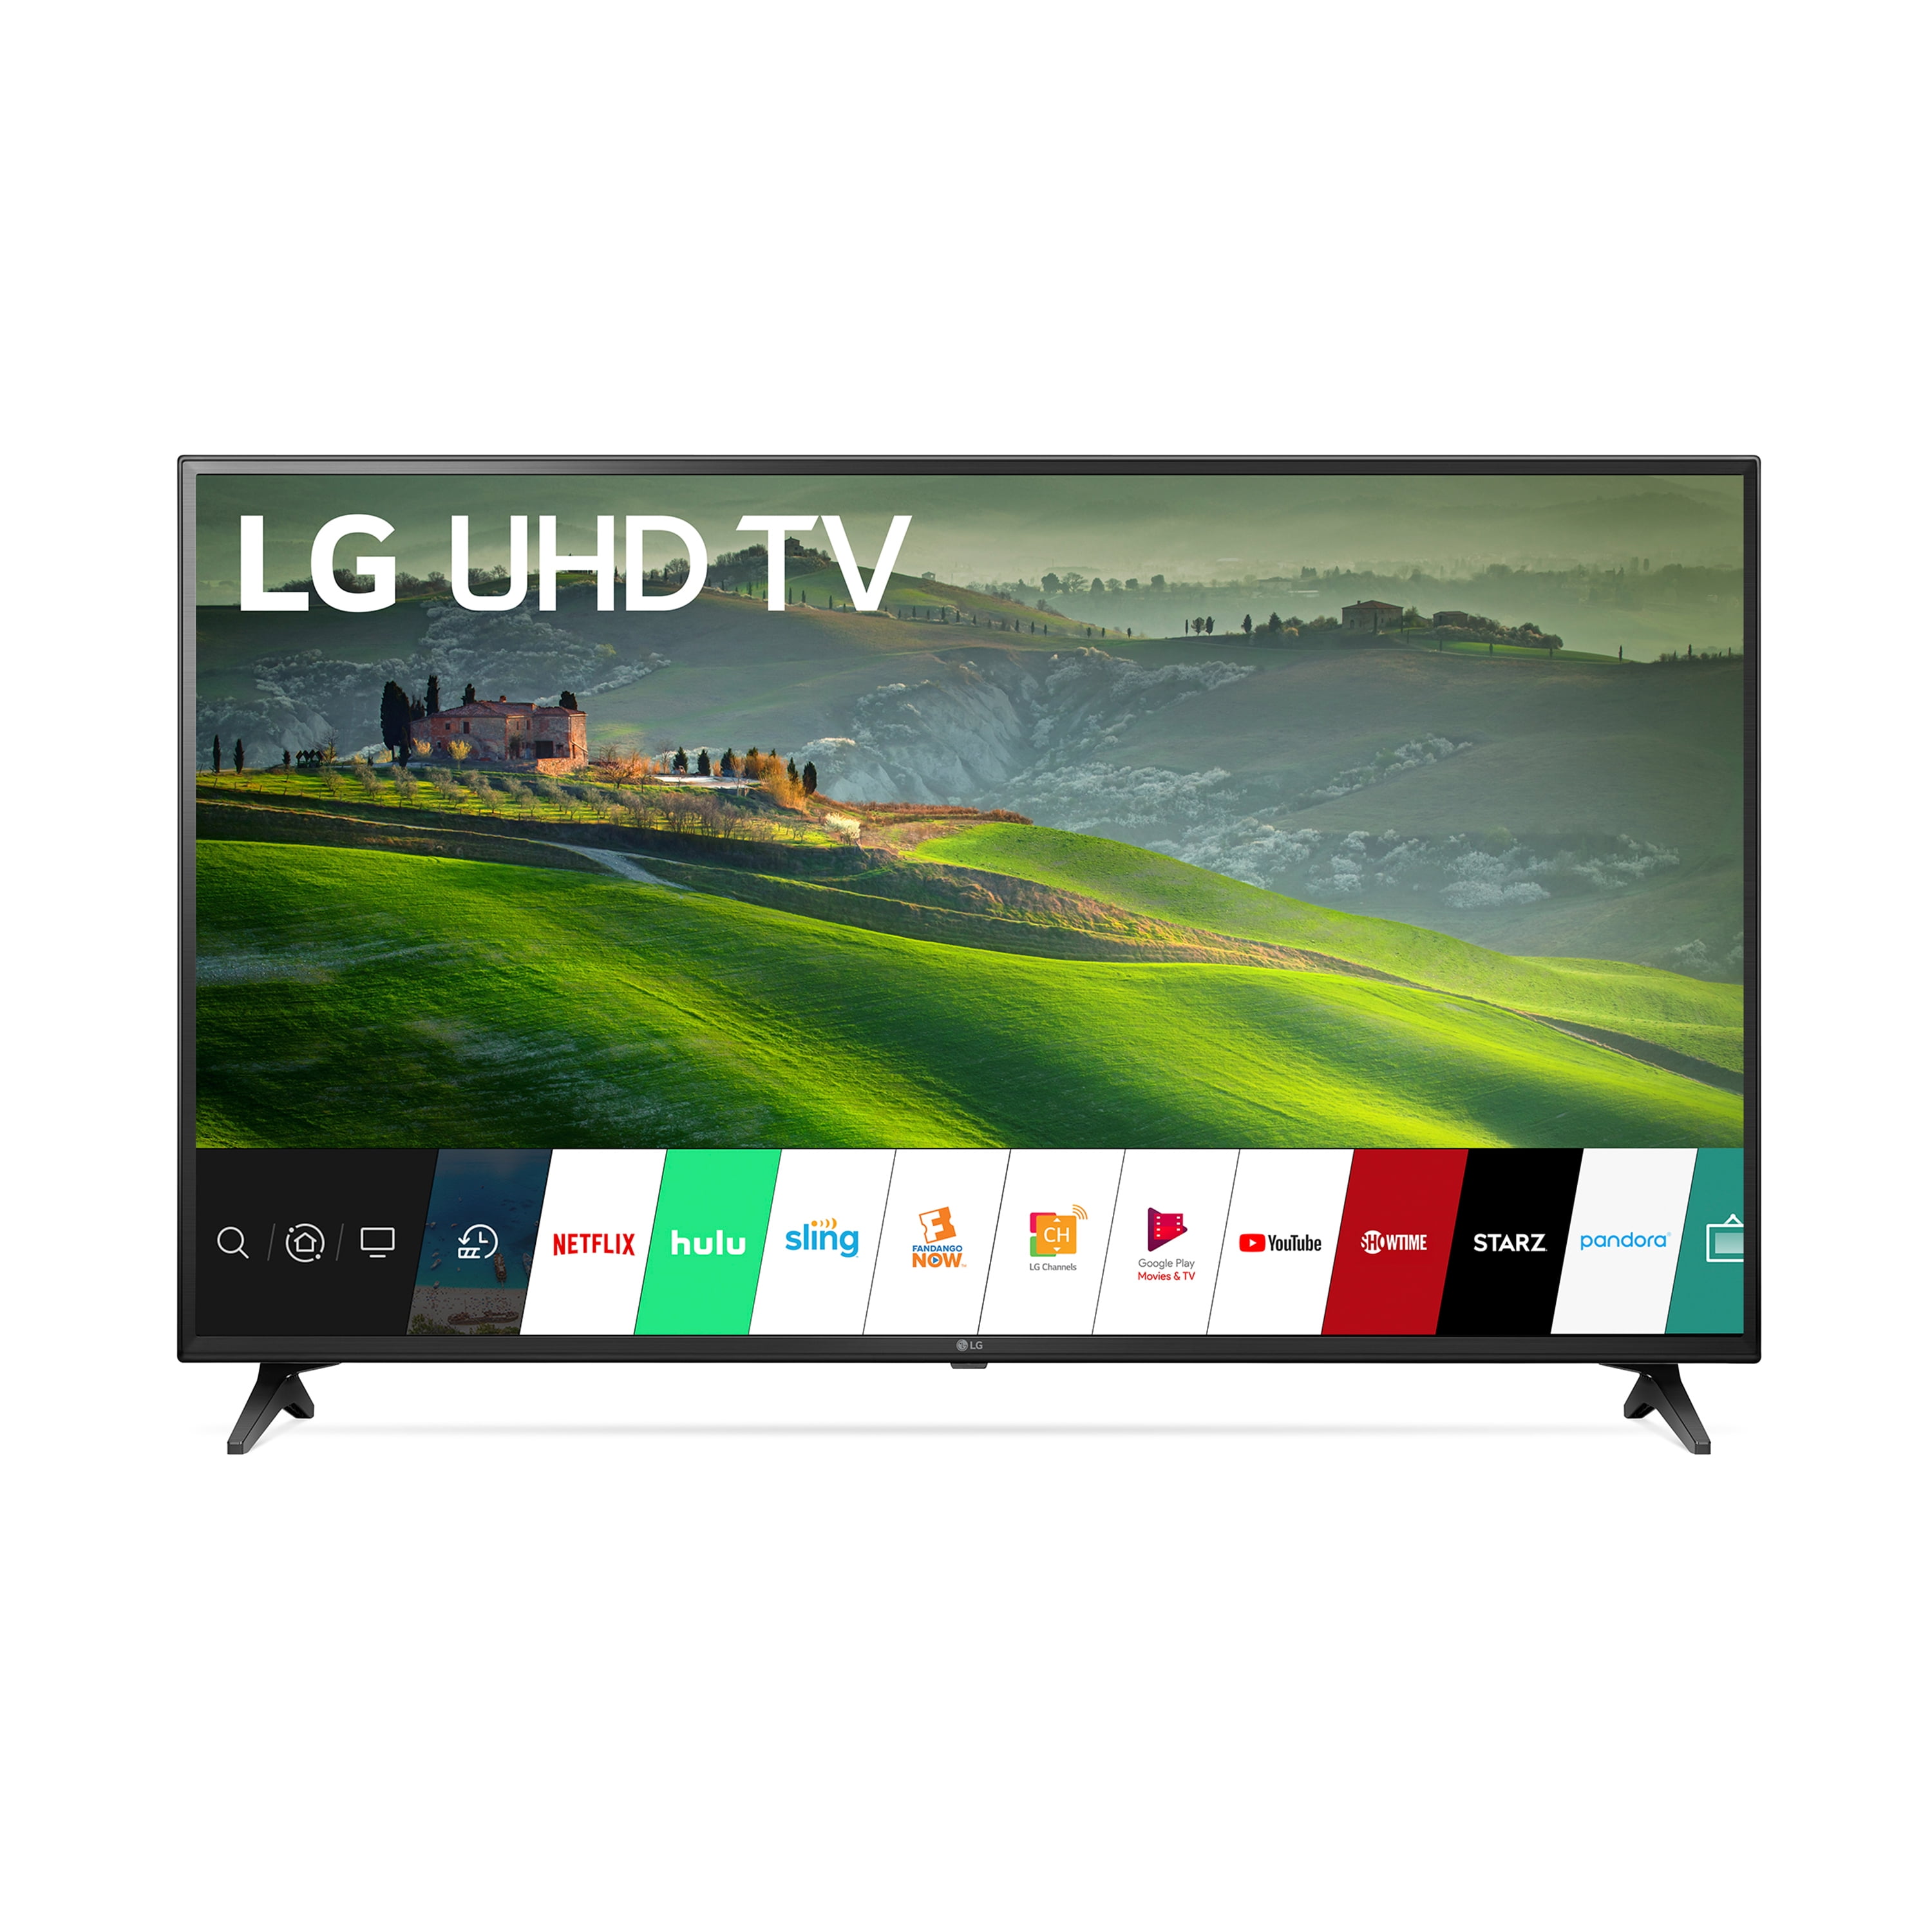 LG 49" Class 4K UHD 2160p LED Smart TV With HDR - Walmart.com